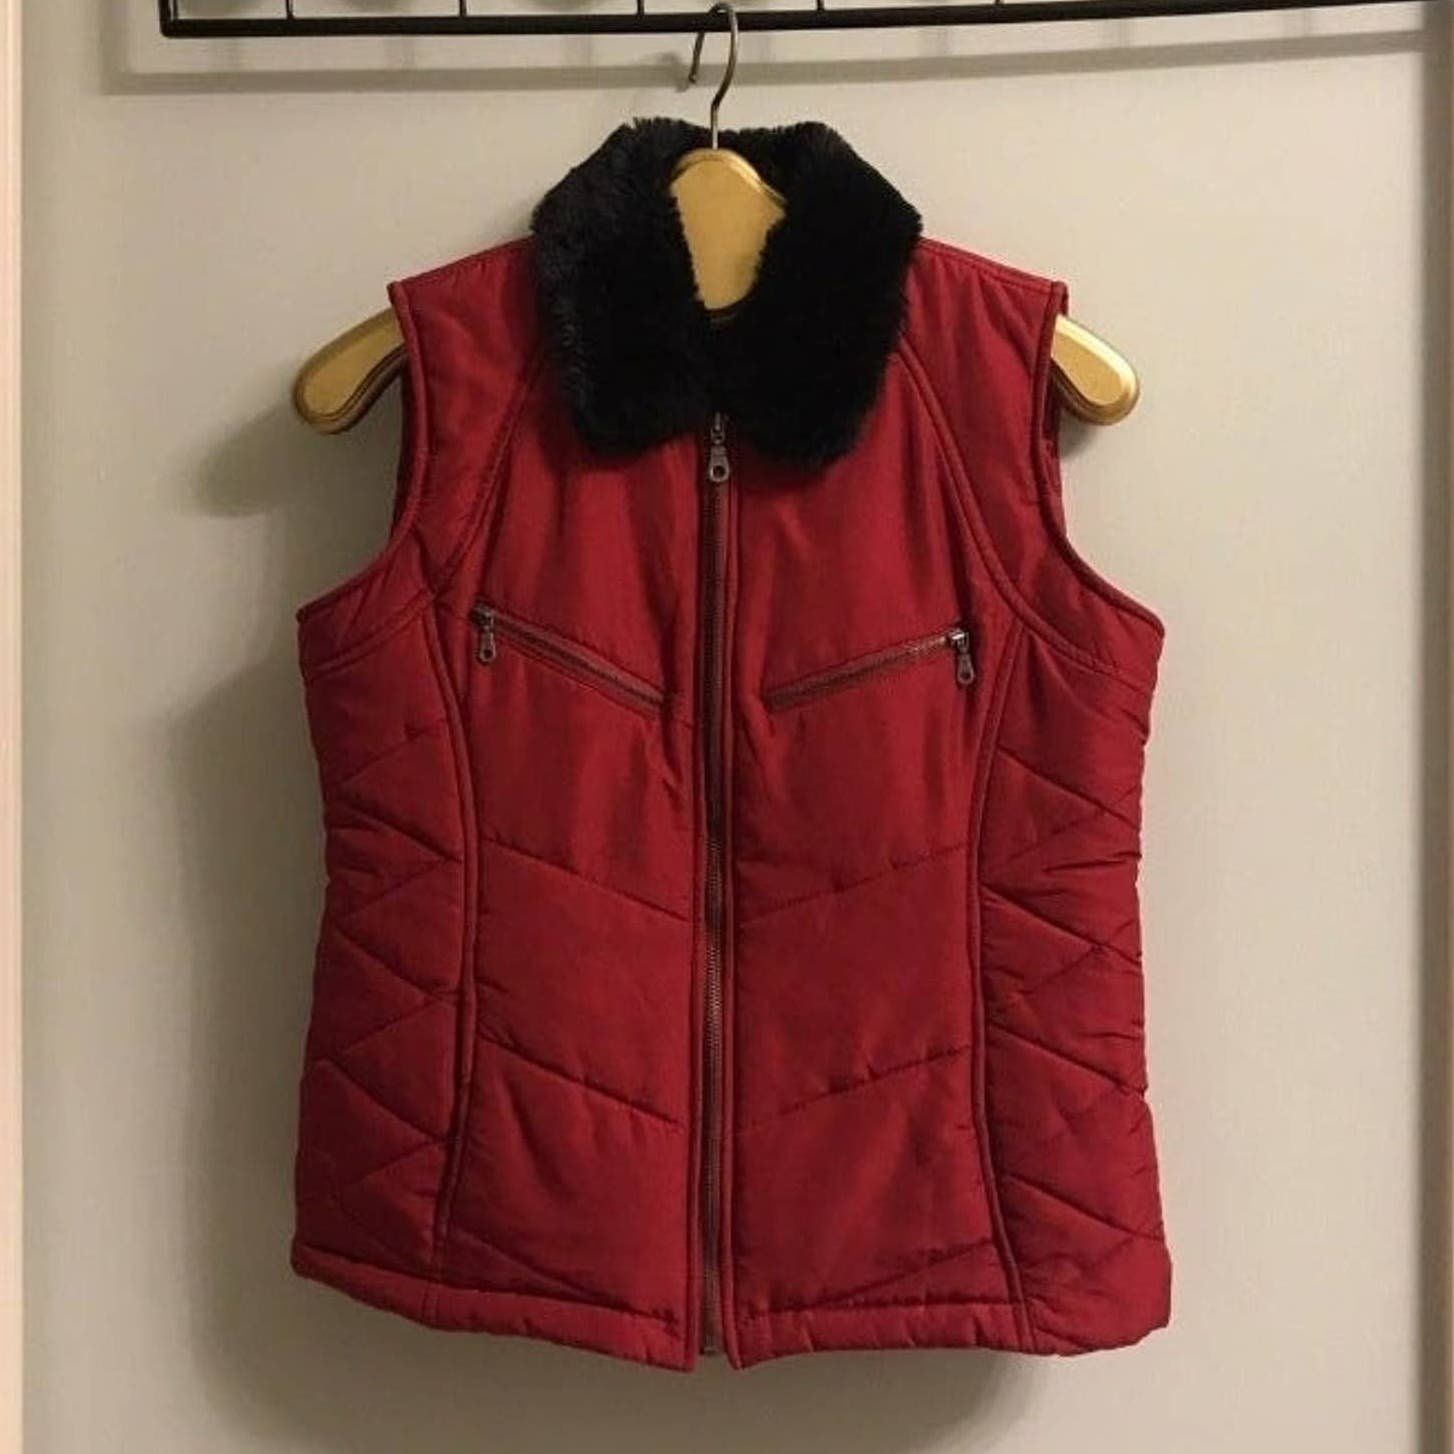 ND women’s full zipper Vest jacket  red sz mp sleeveles